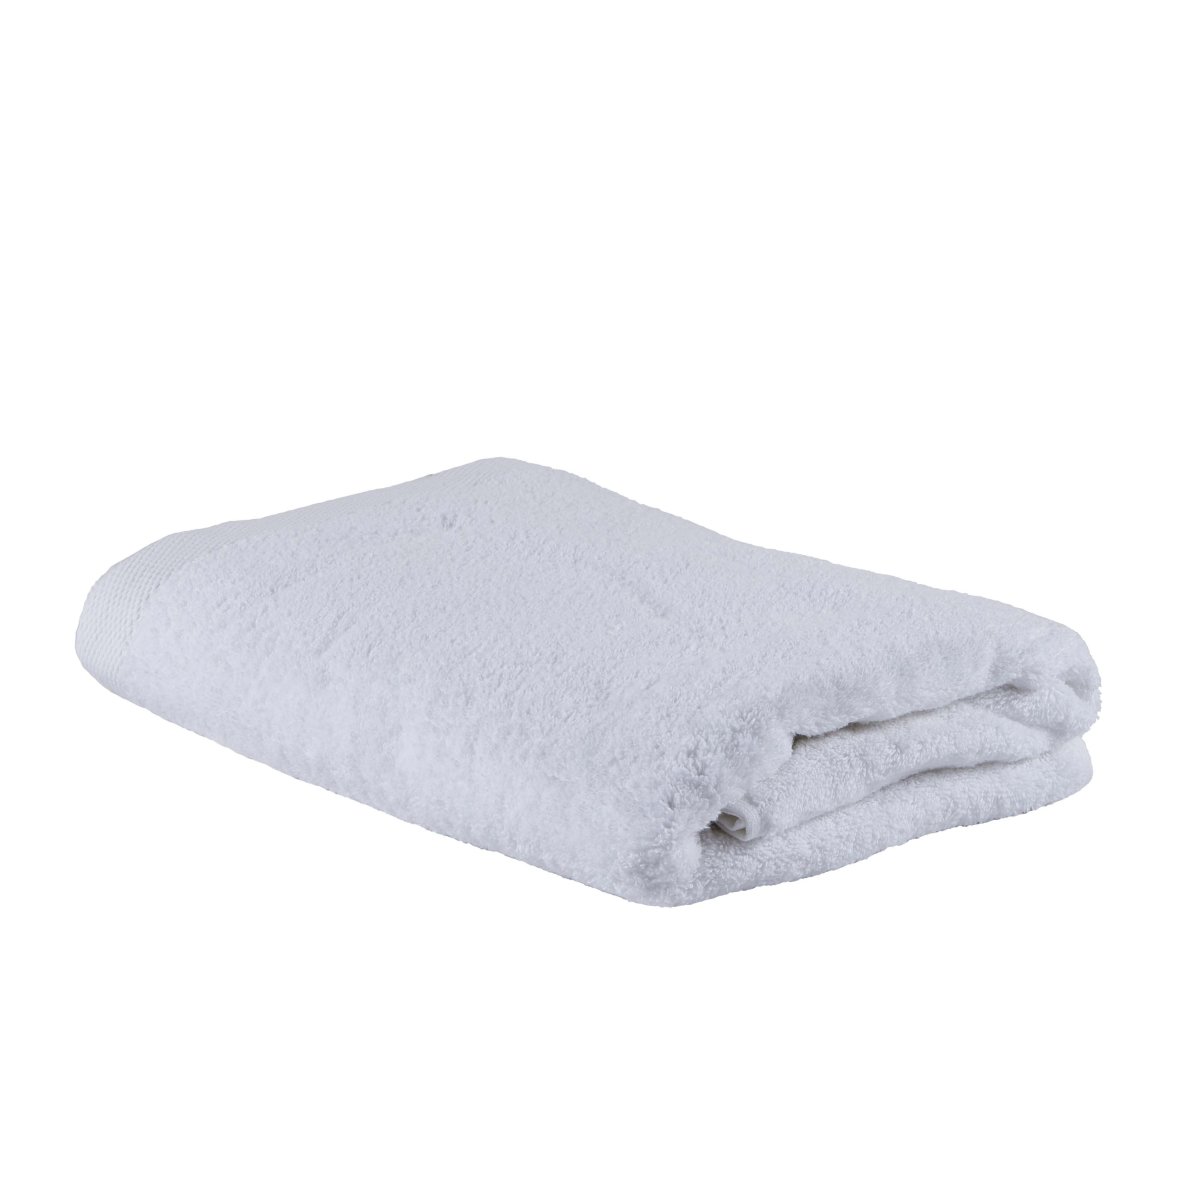 Bahne Original håndklæde, hvid 70x140 cm